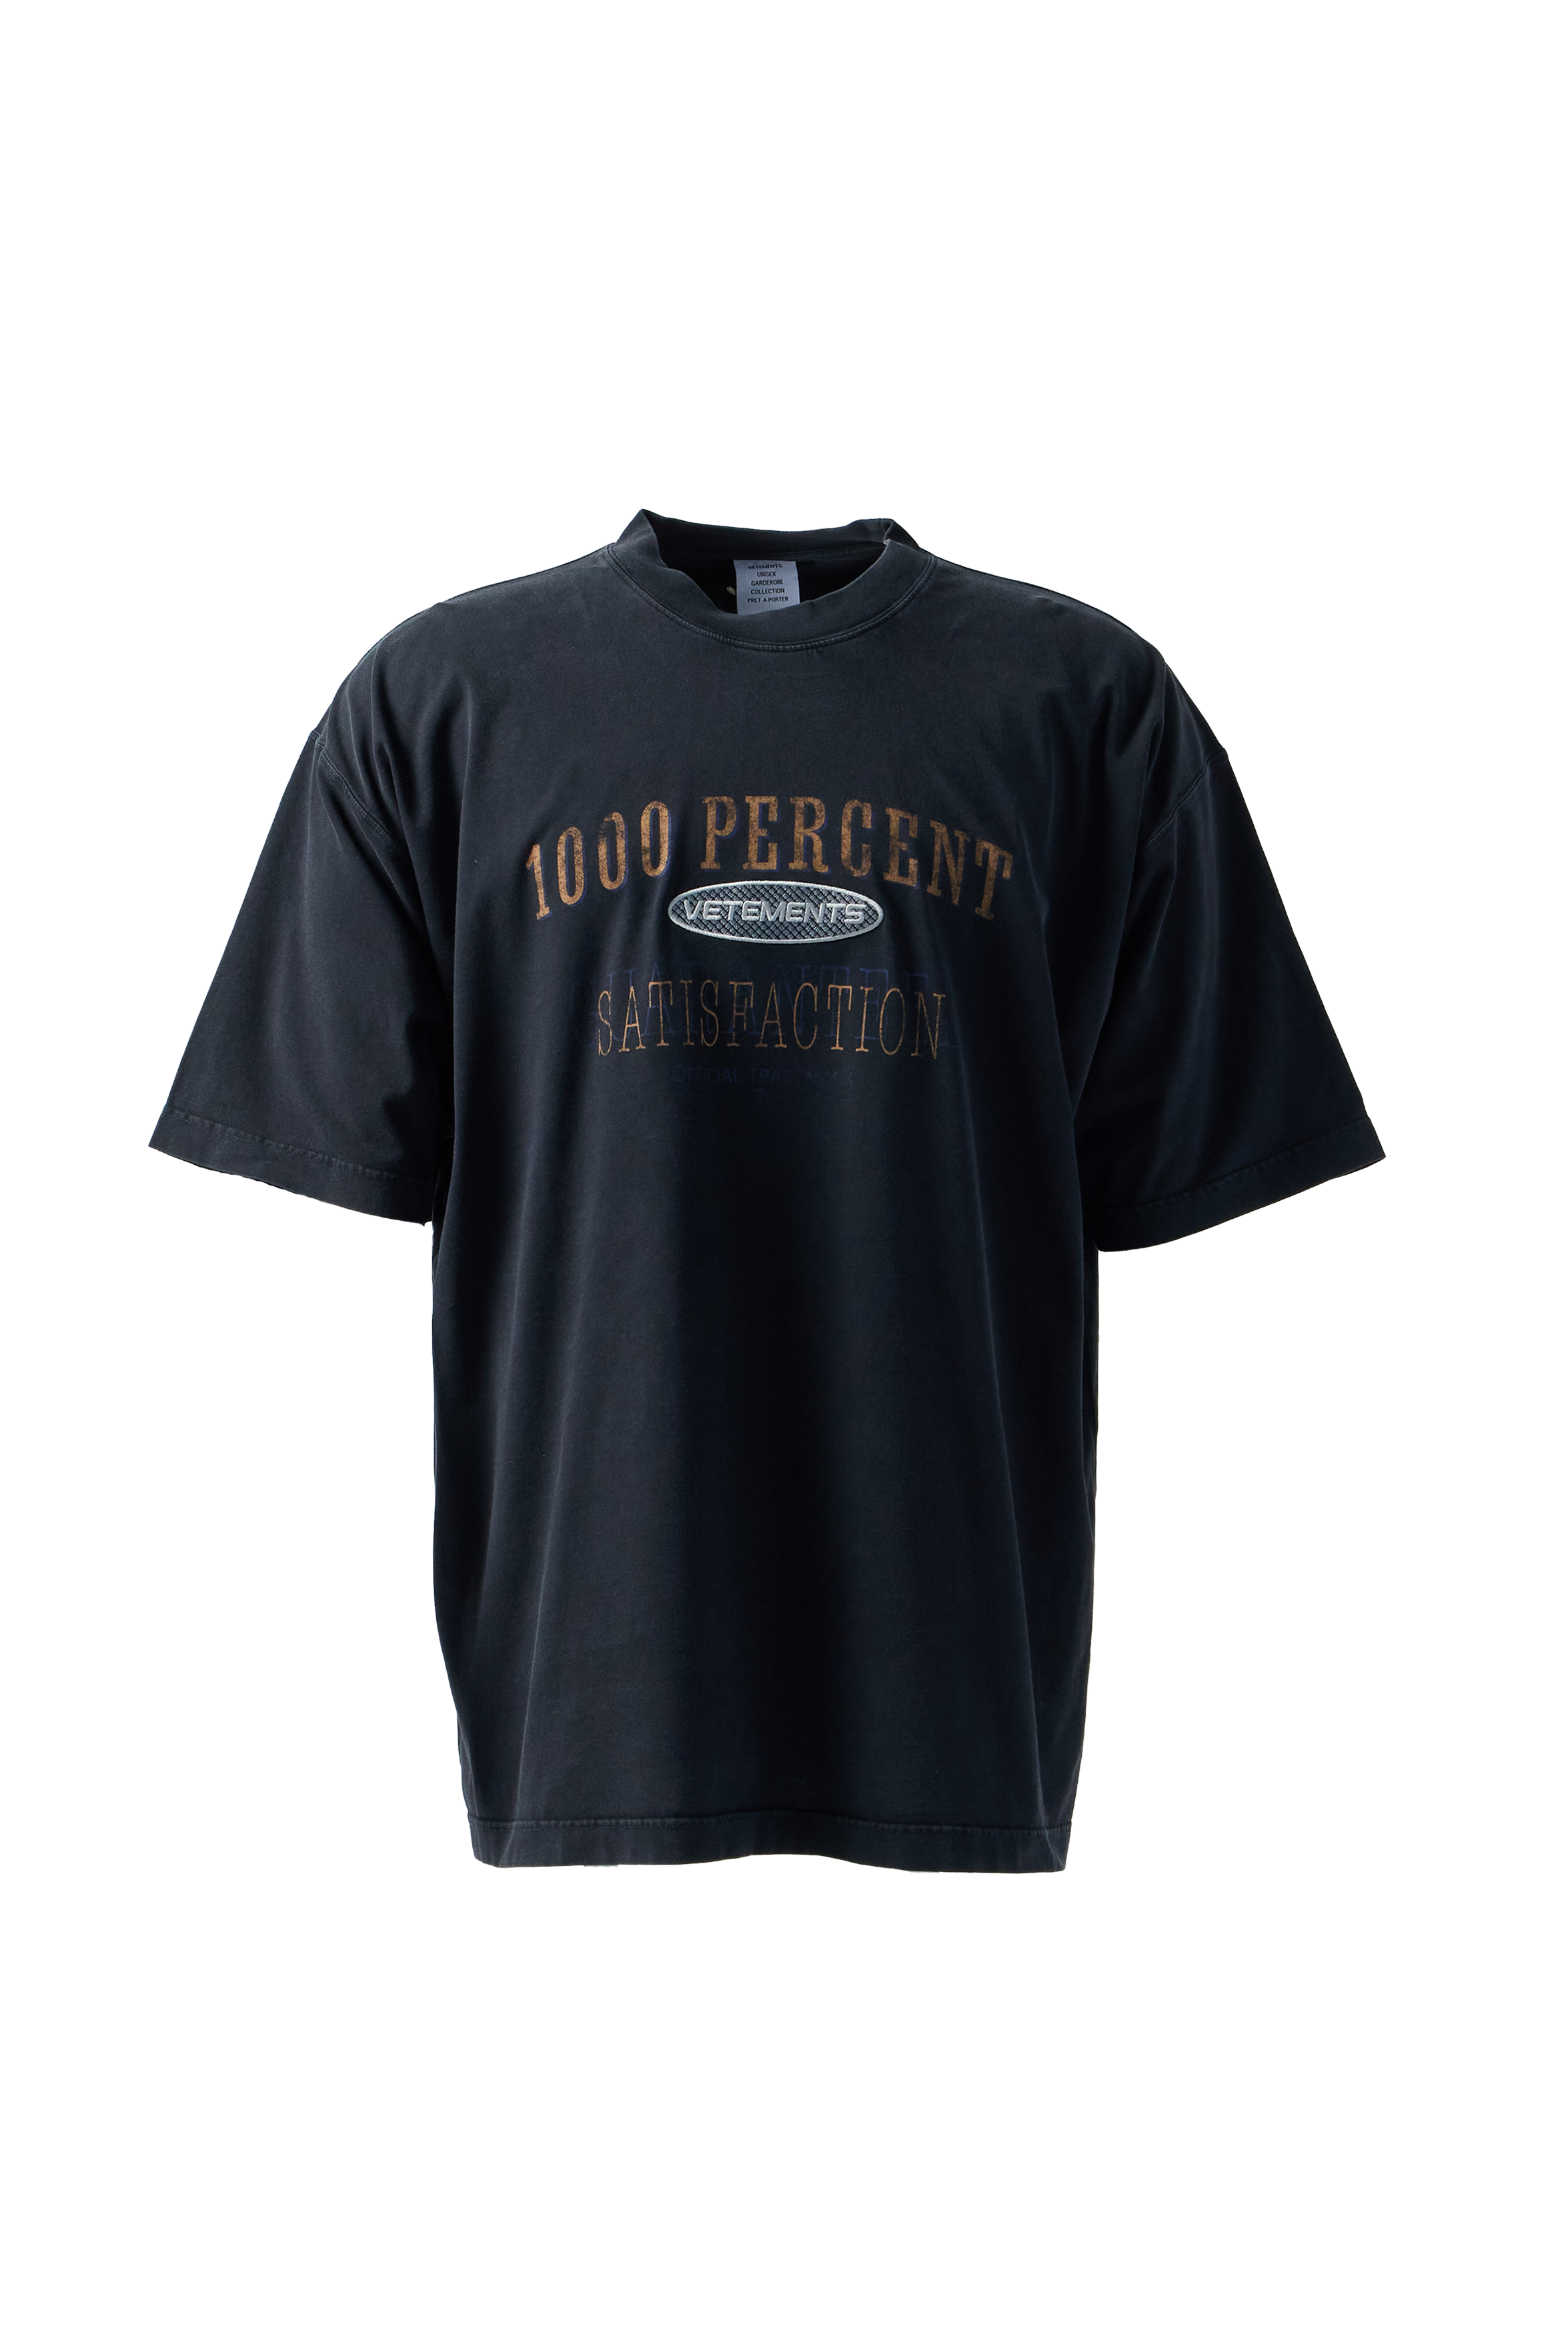 VETEMENTS - 1000 Percent T-Shirt product image